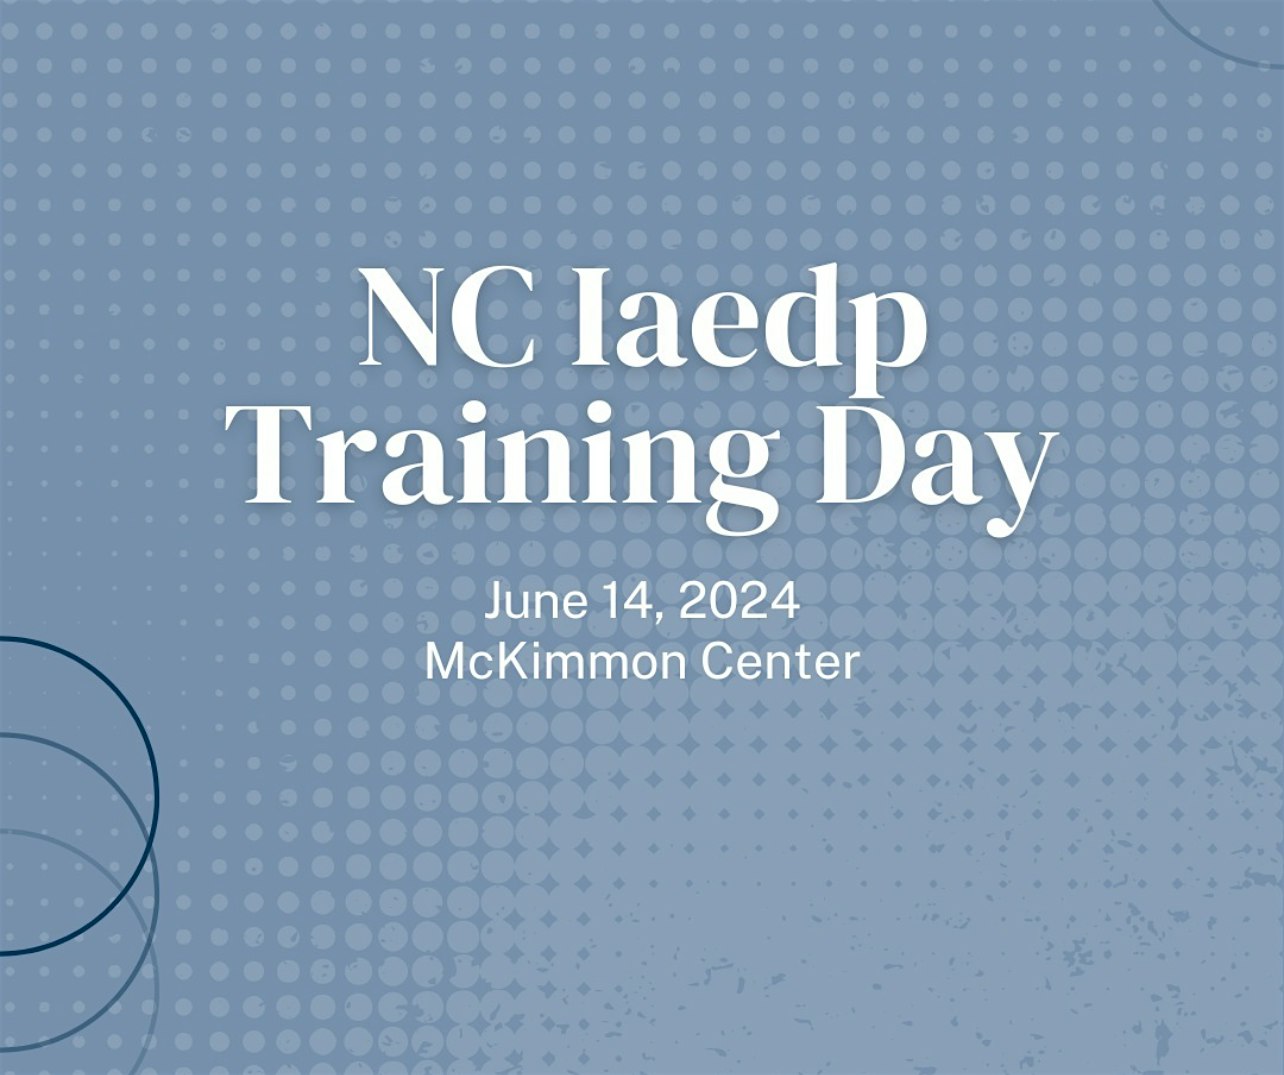 2024 NC iaedp Training Day